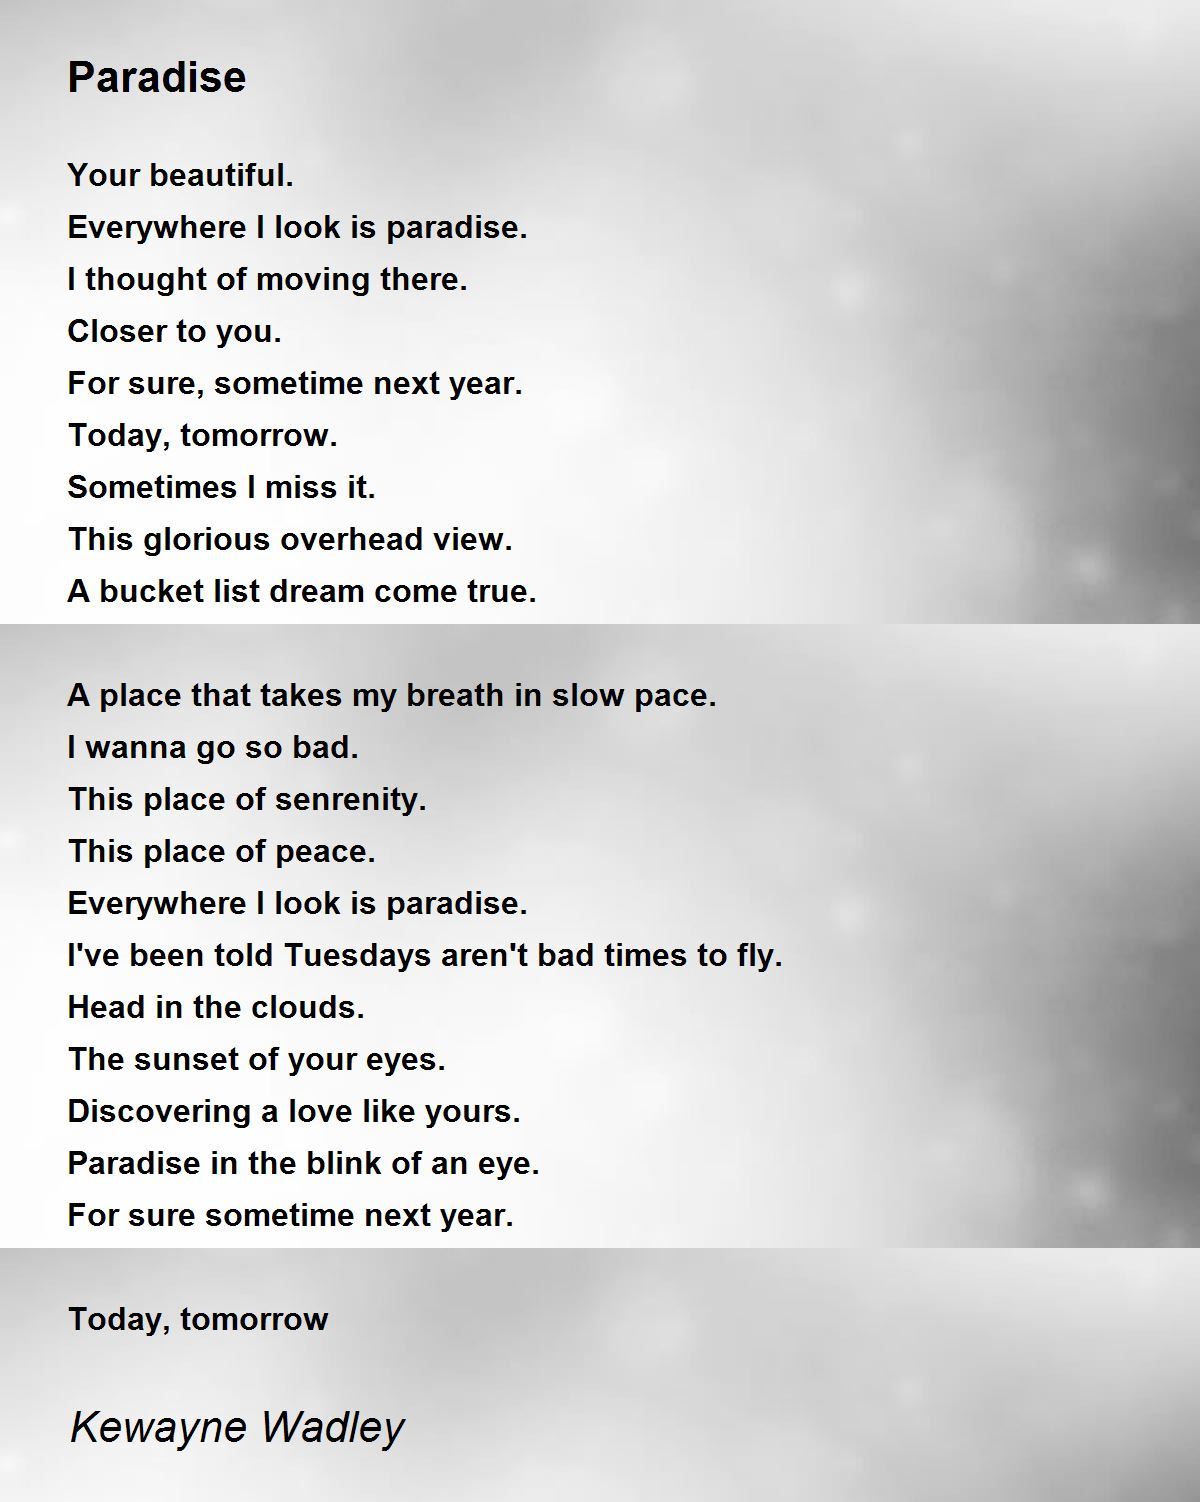 Everywhere You Go - Everywhere You Go Poem by Kewayne Wadley